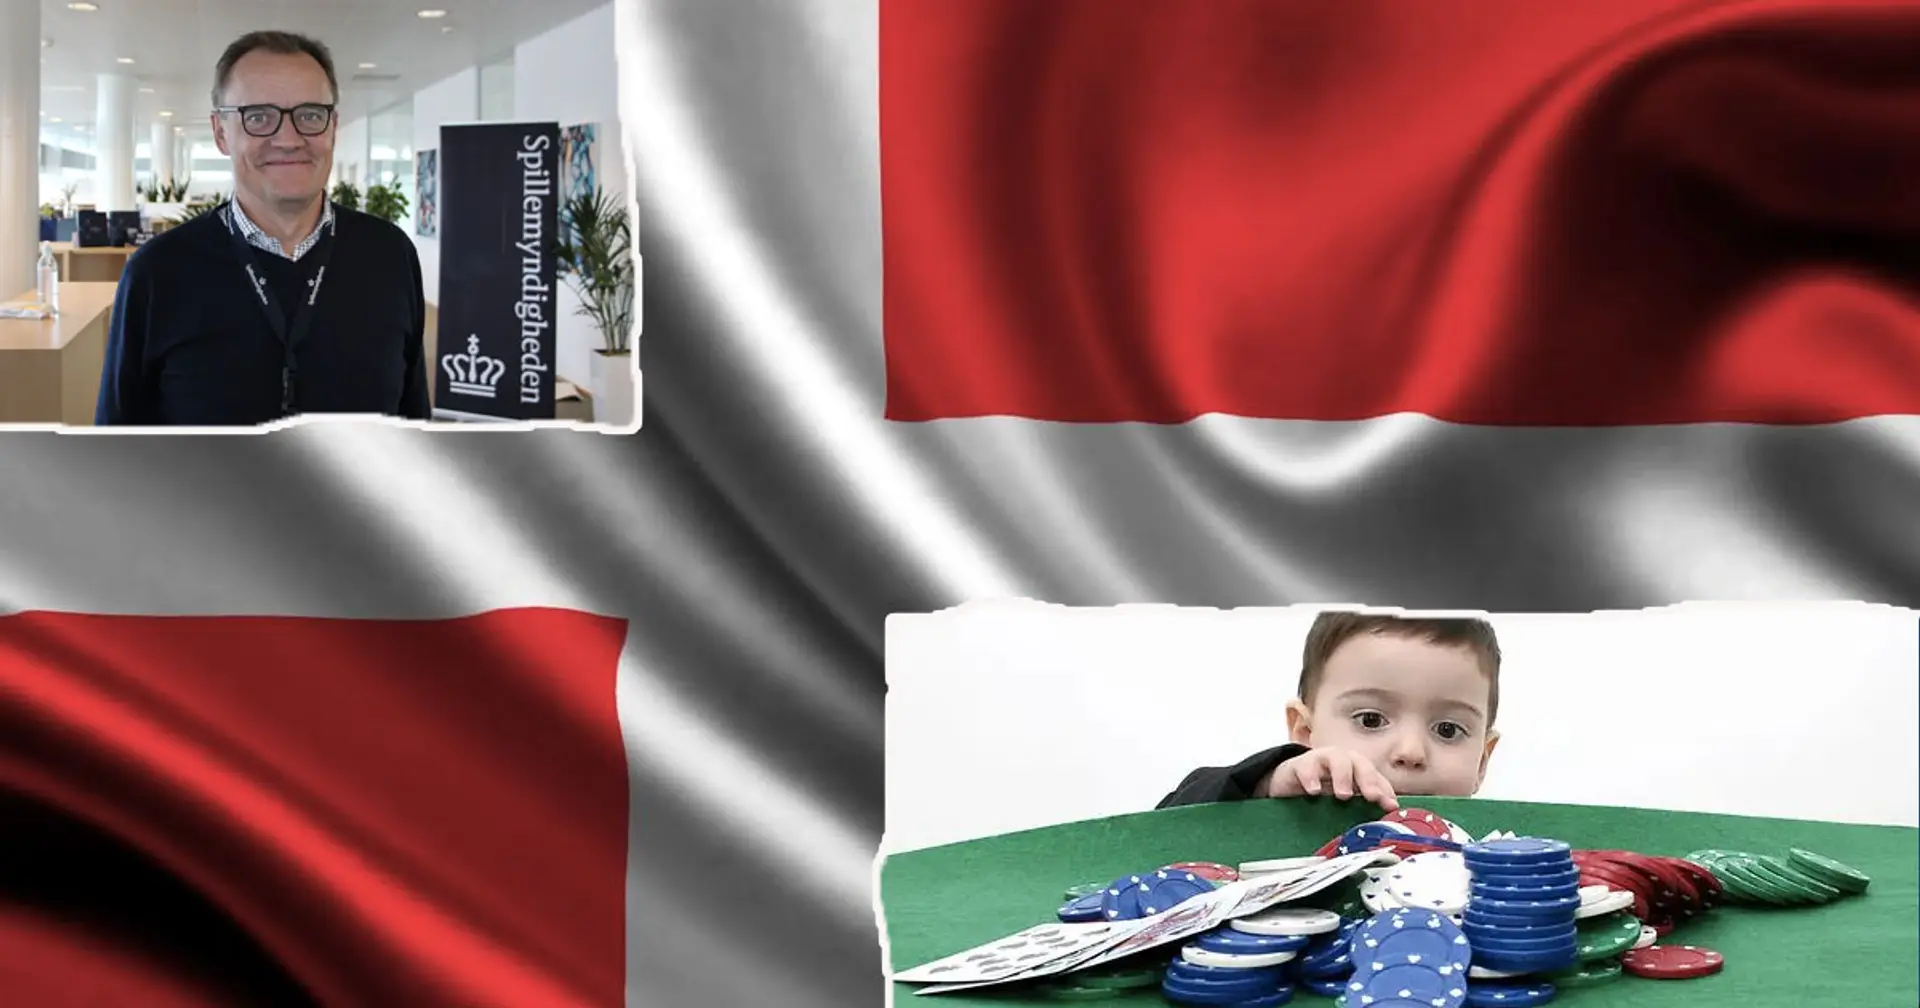 83 illegal gambling websites blocked in Denmark, regulator voices children gambling concerns